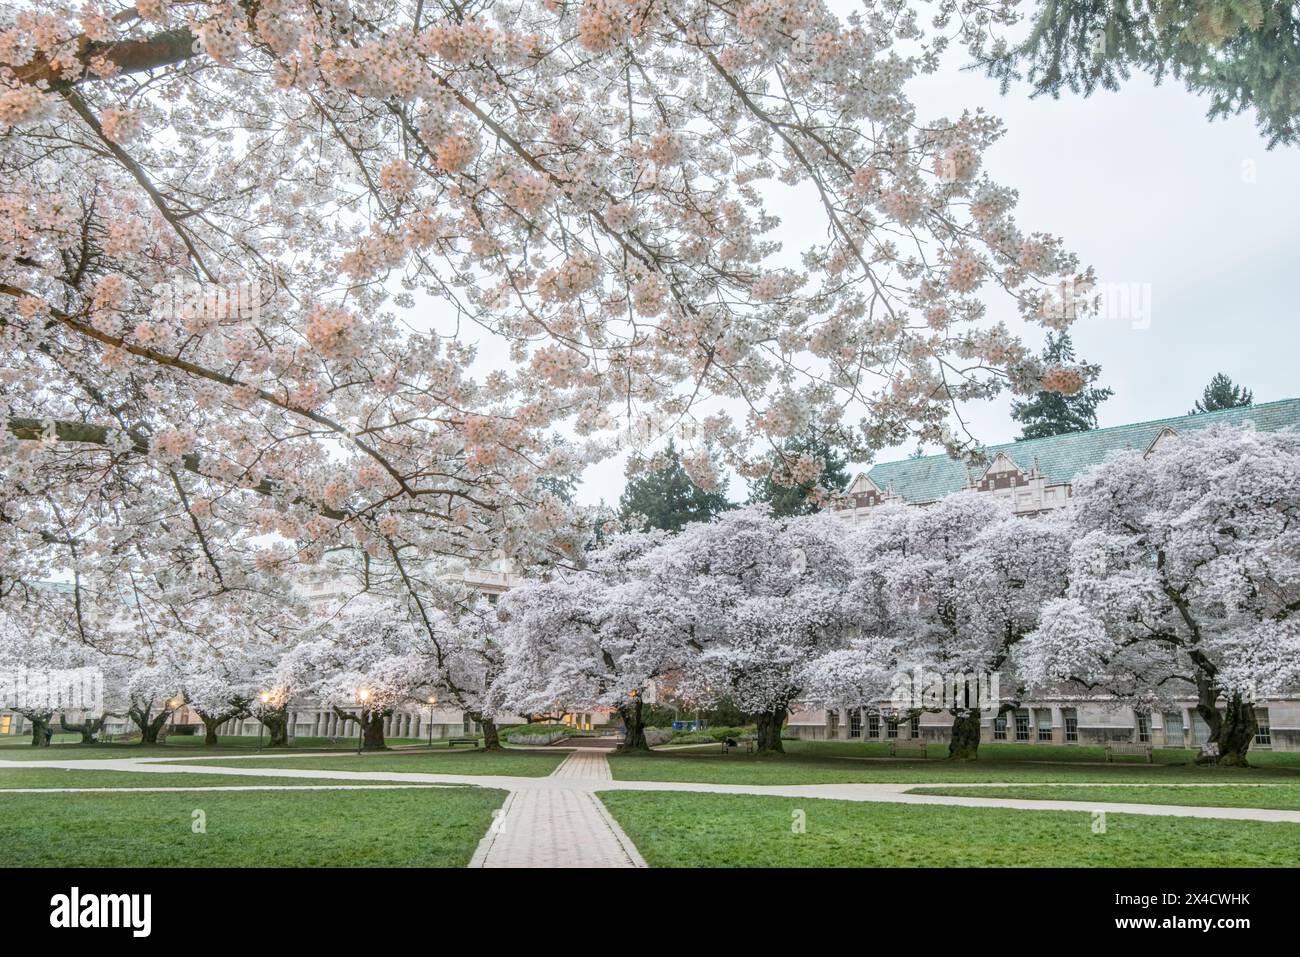 USA, Washington State, Seattle. University of Washington Quad at dawn. (Editorial Use Only) Stock Photo